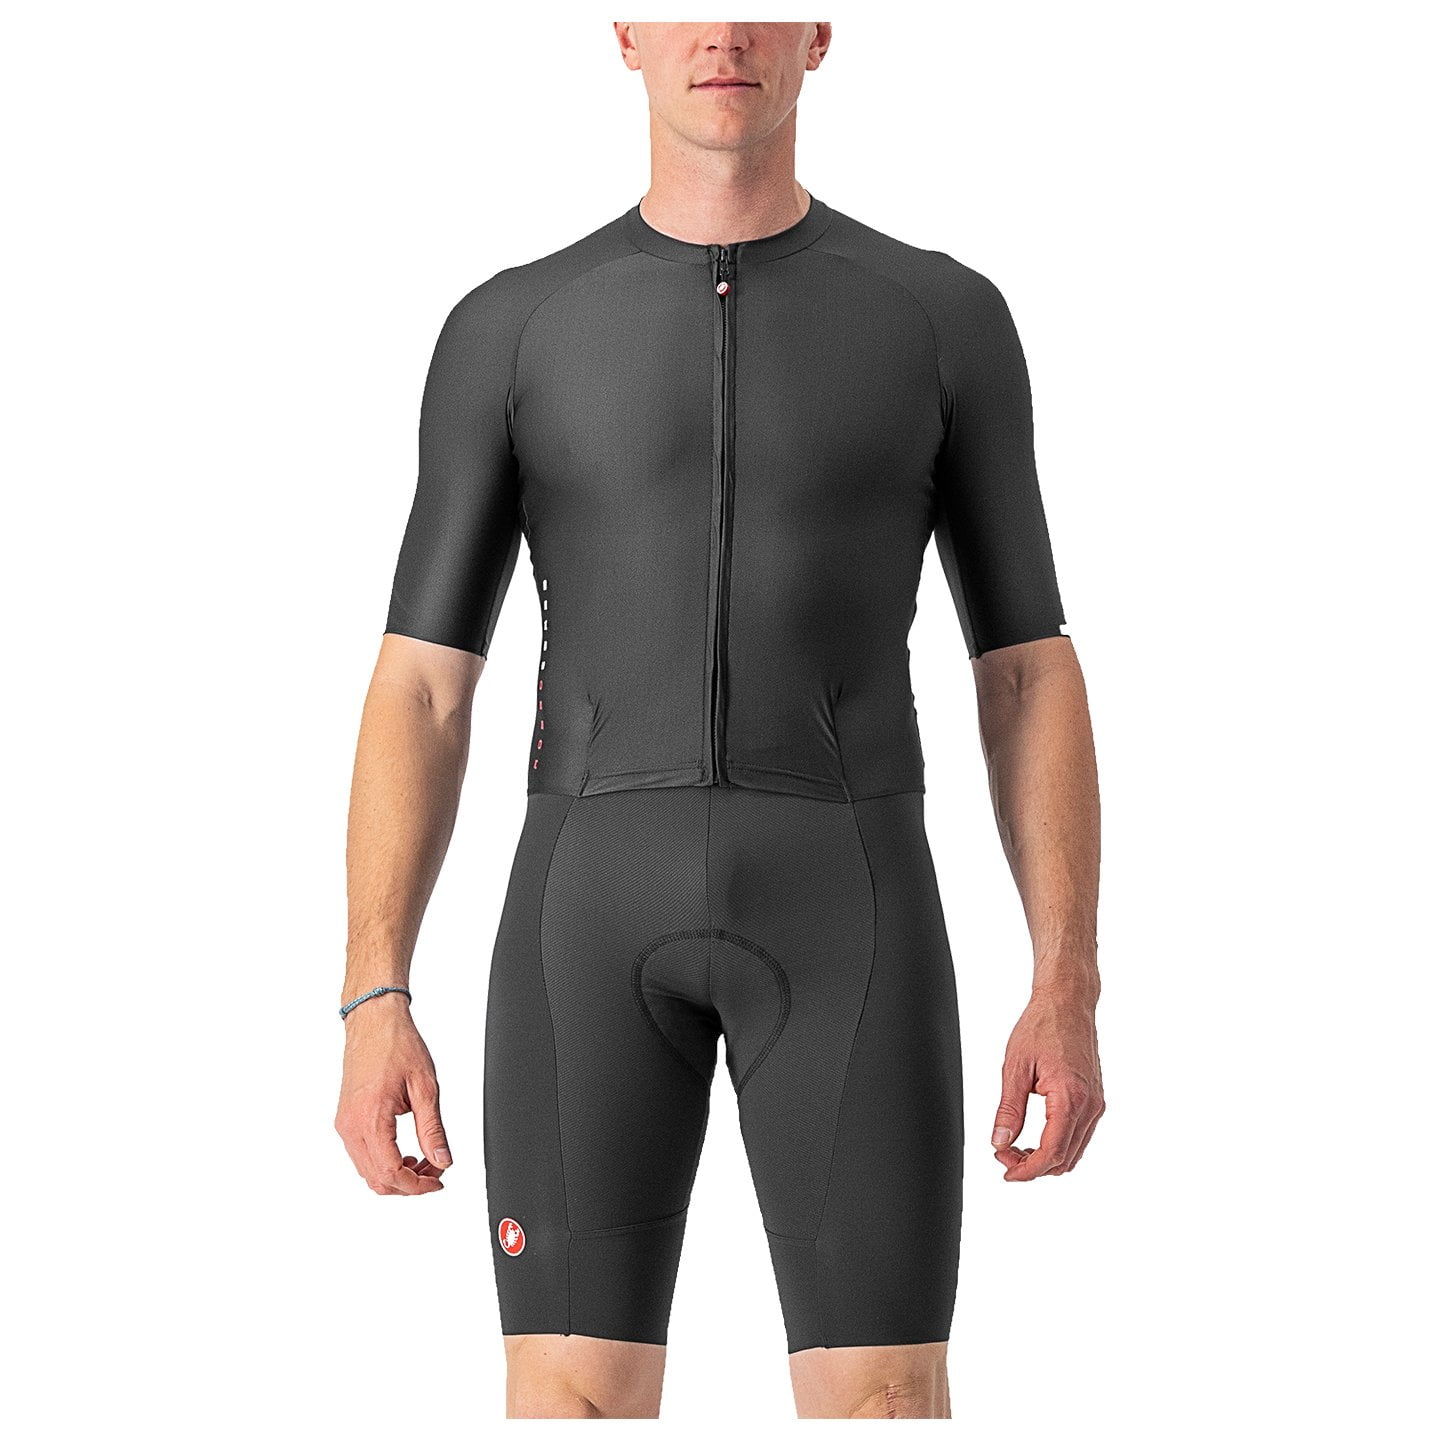 CASTELLI Sanremo RC Race Bodysuit Race Bodysuit, for men, size 2XL, Cycling body, Cycling clothing